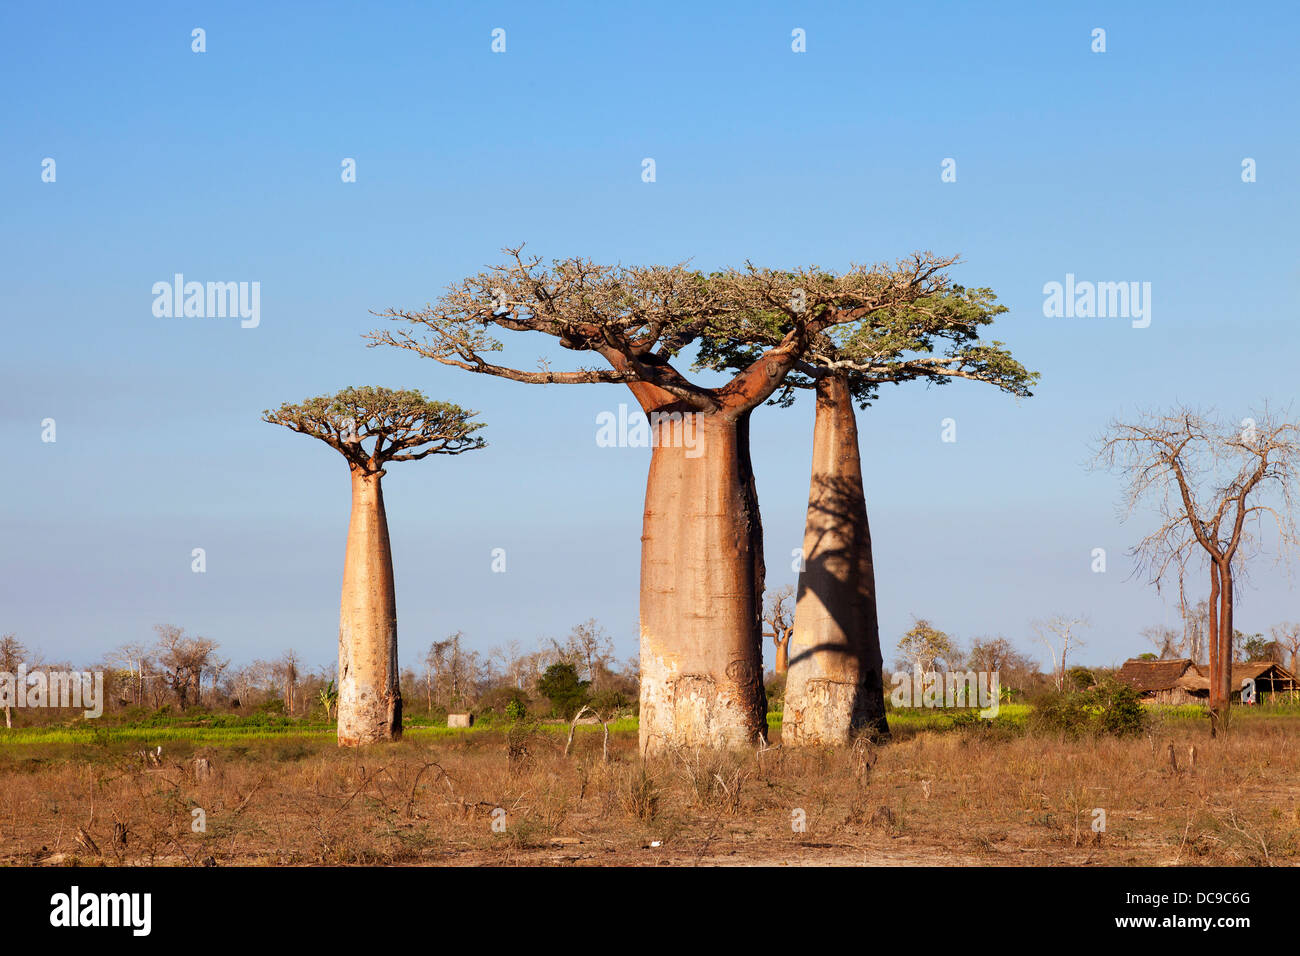 Le Baobab africain (Adansonia digitata), forêt de baobab Banque D'Images